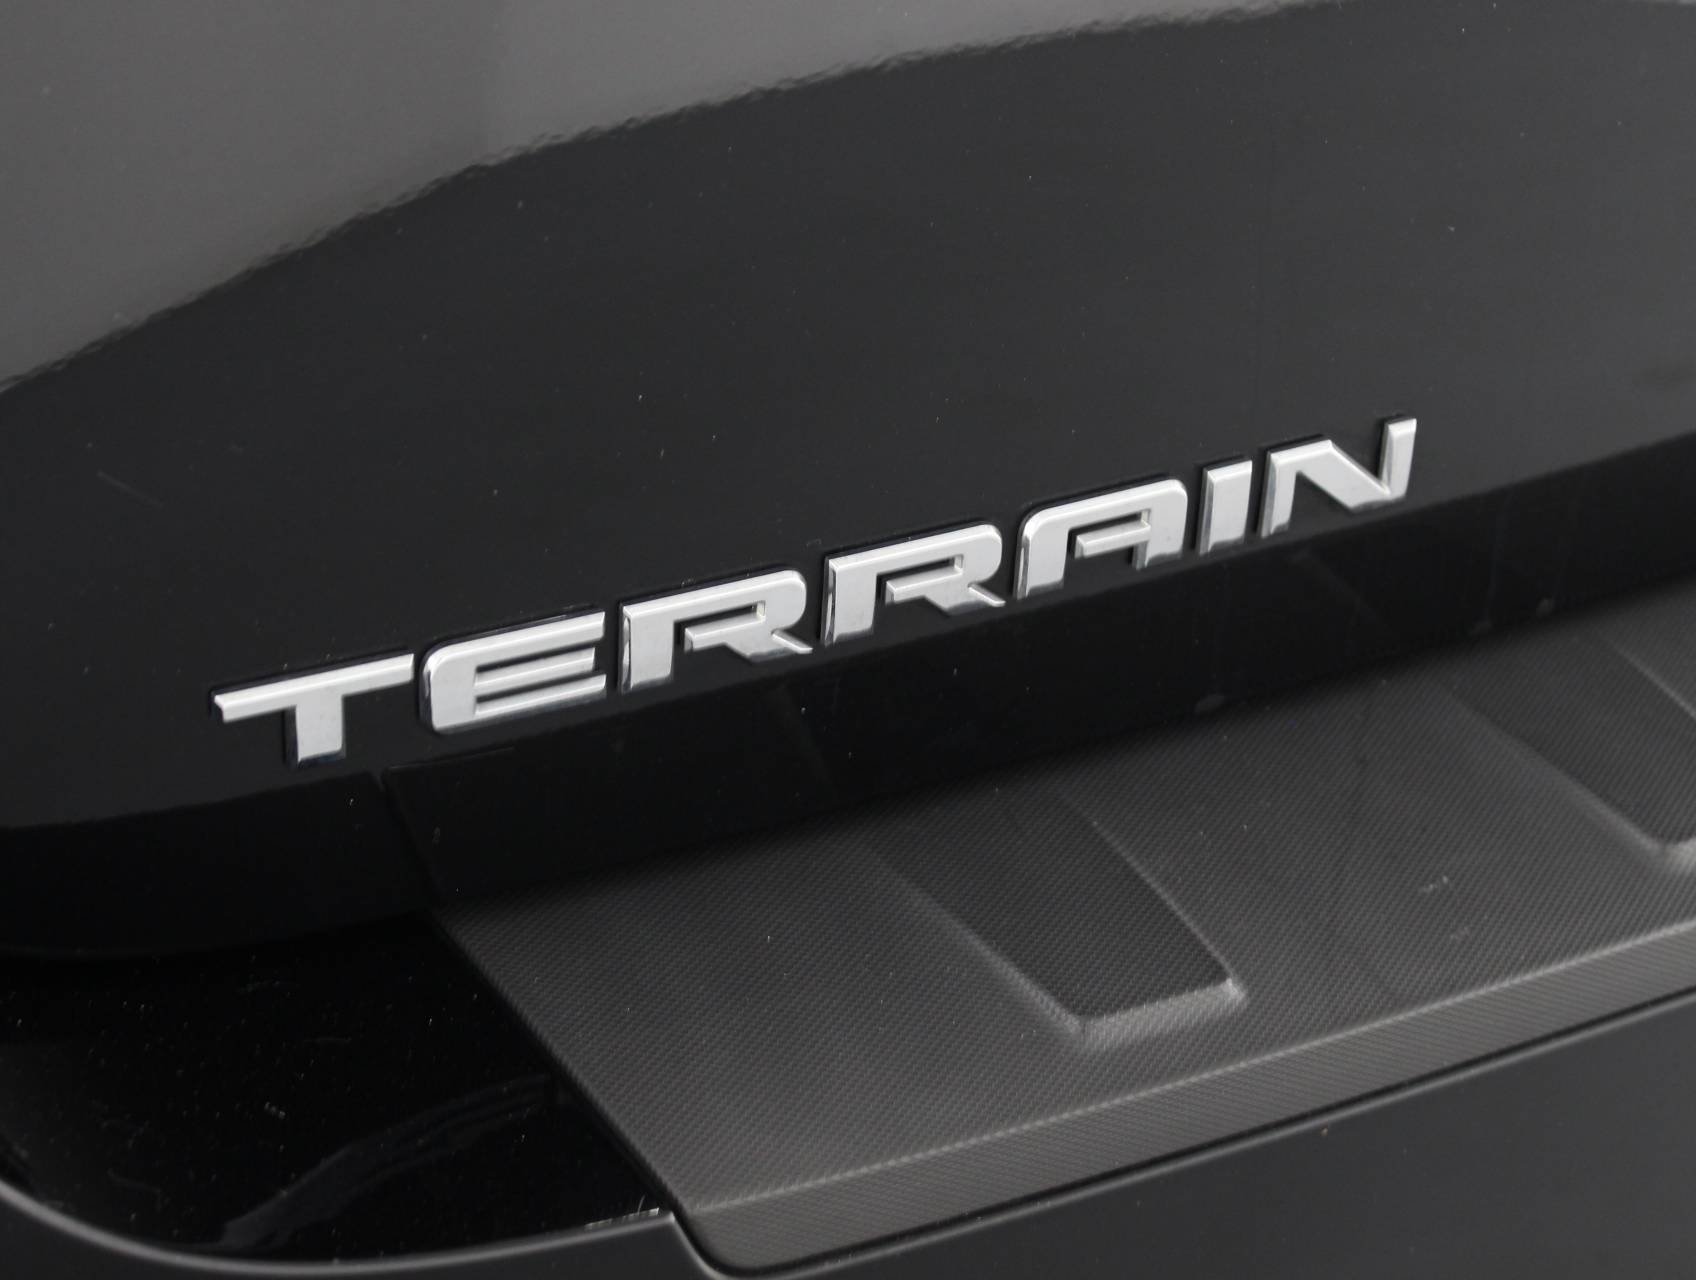 Florida Fine Cars - Used GMC TERRAIN 2015 WEST PALM SLT1